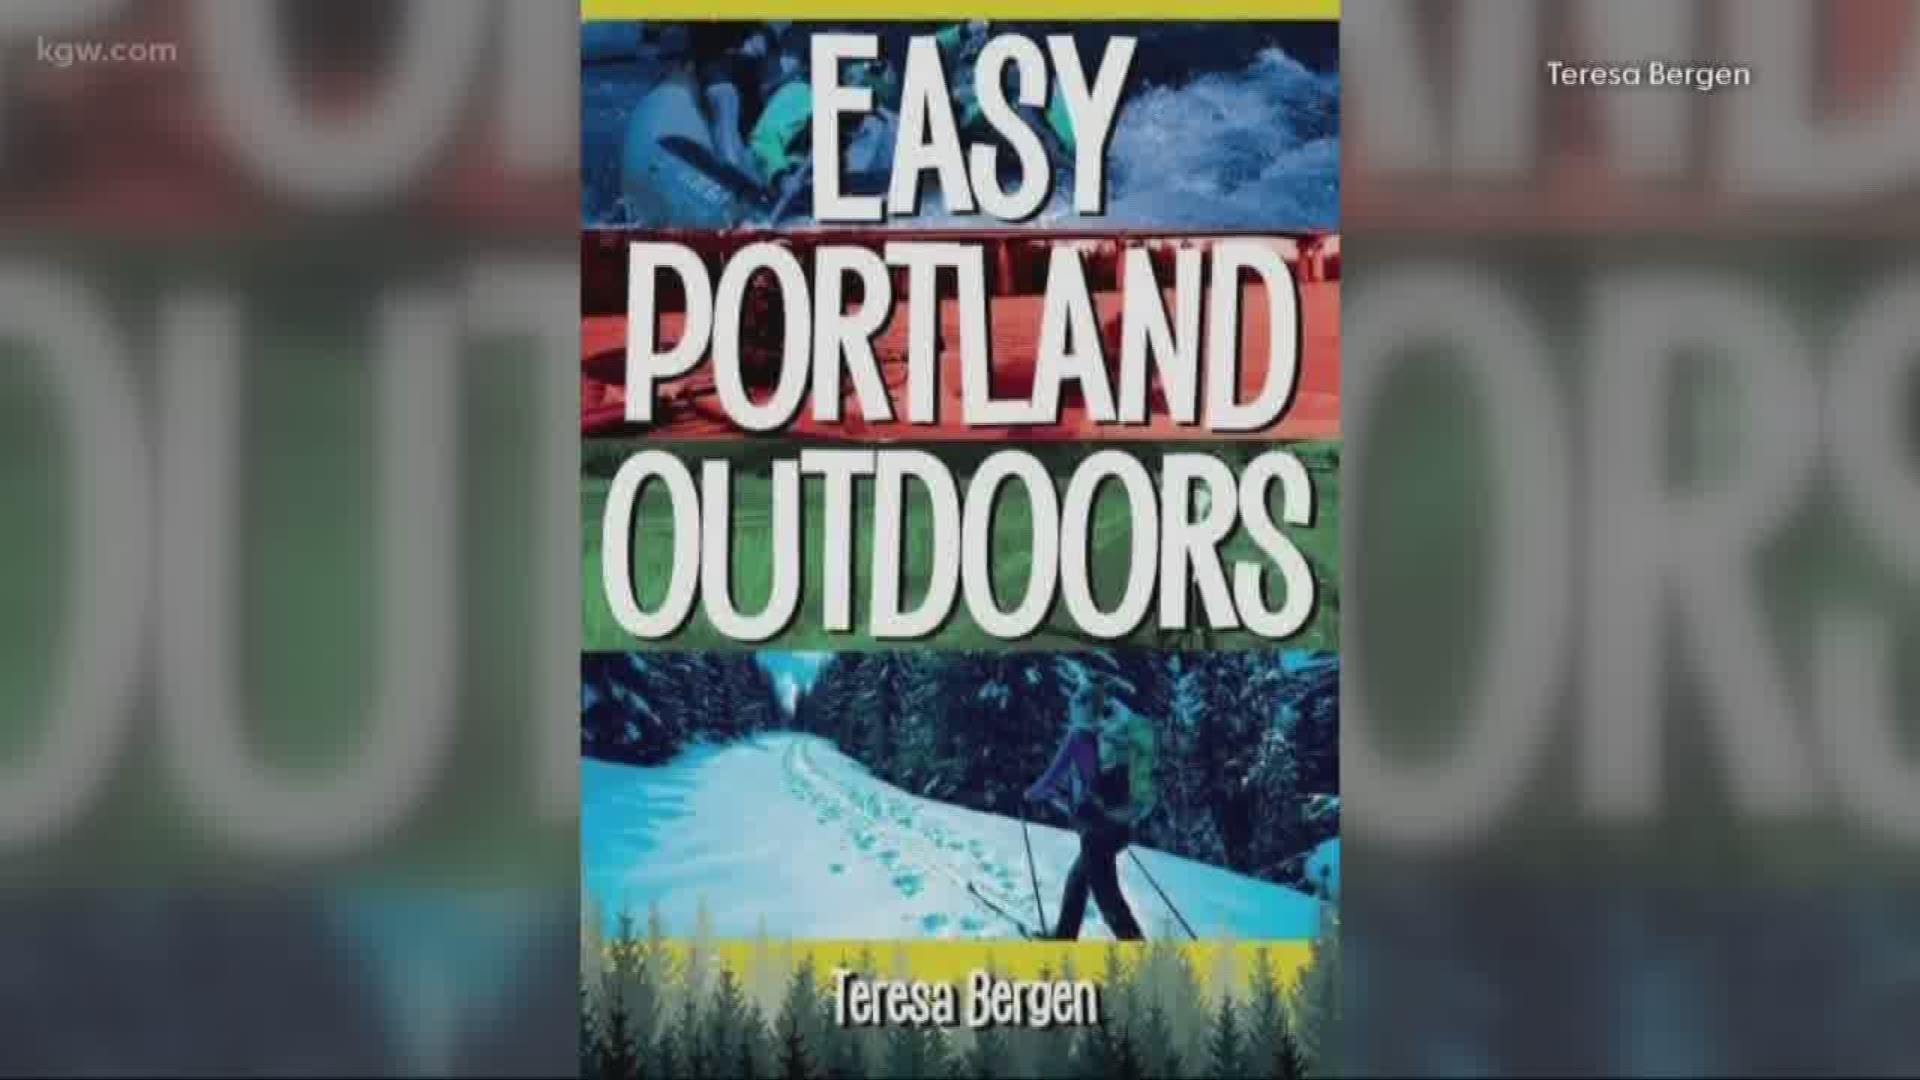 Author Teresa Bergen gives her picks for winter fun